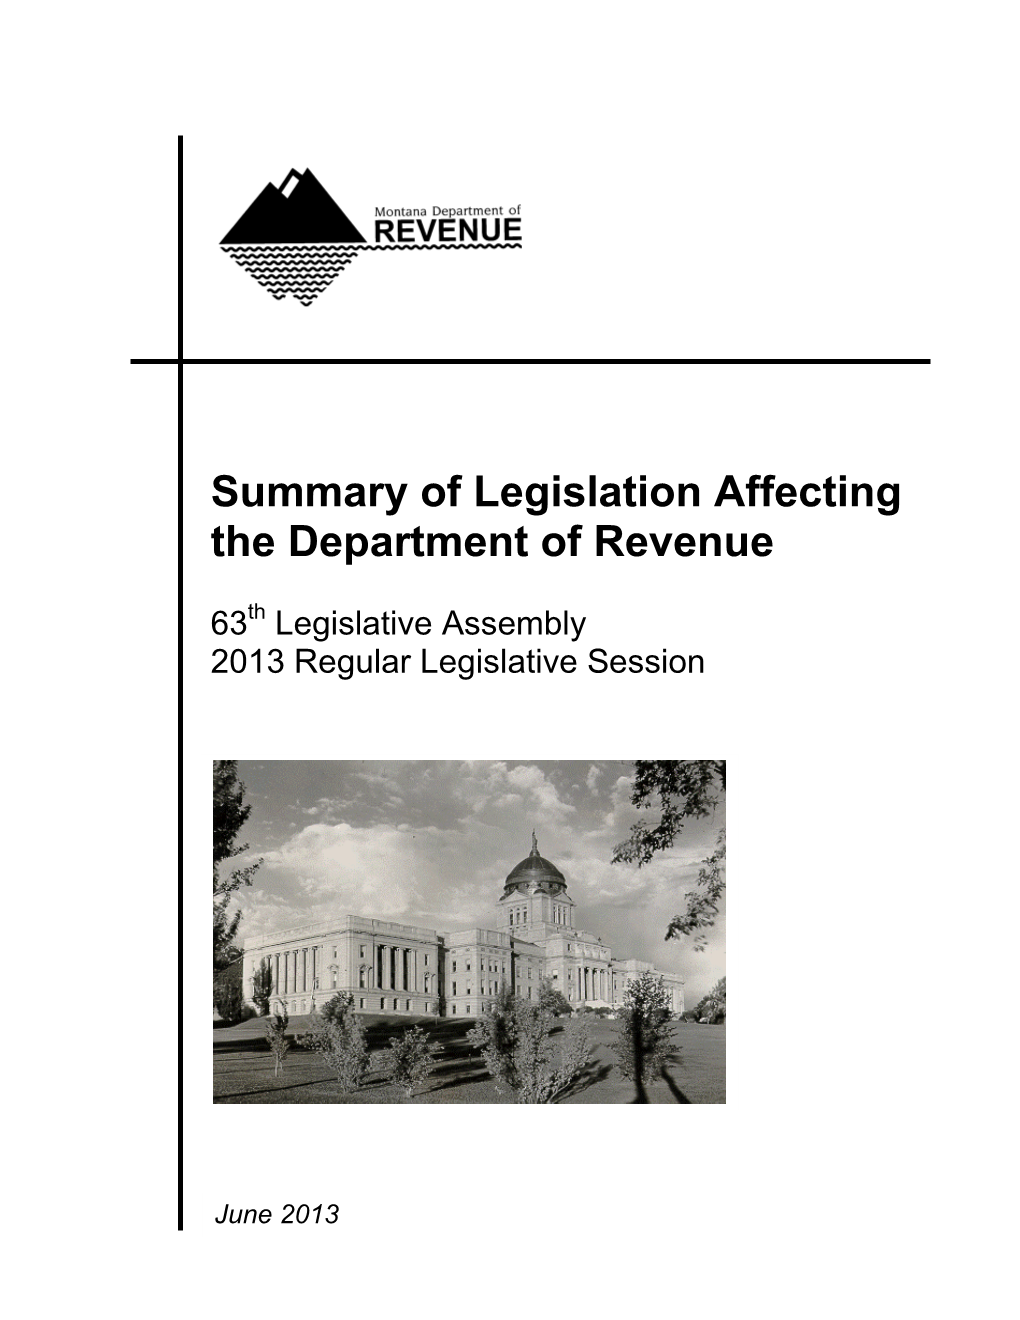 Summary of Legislation Affecting the Department of Revenue